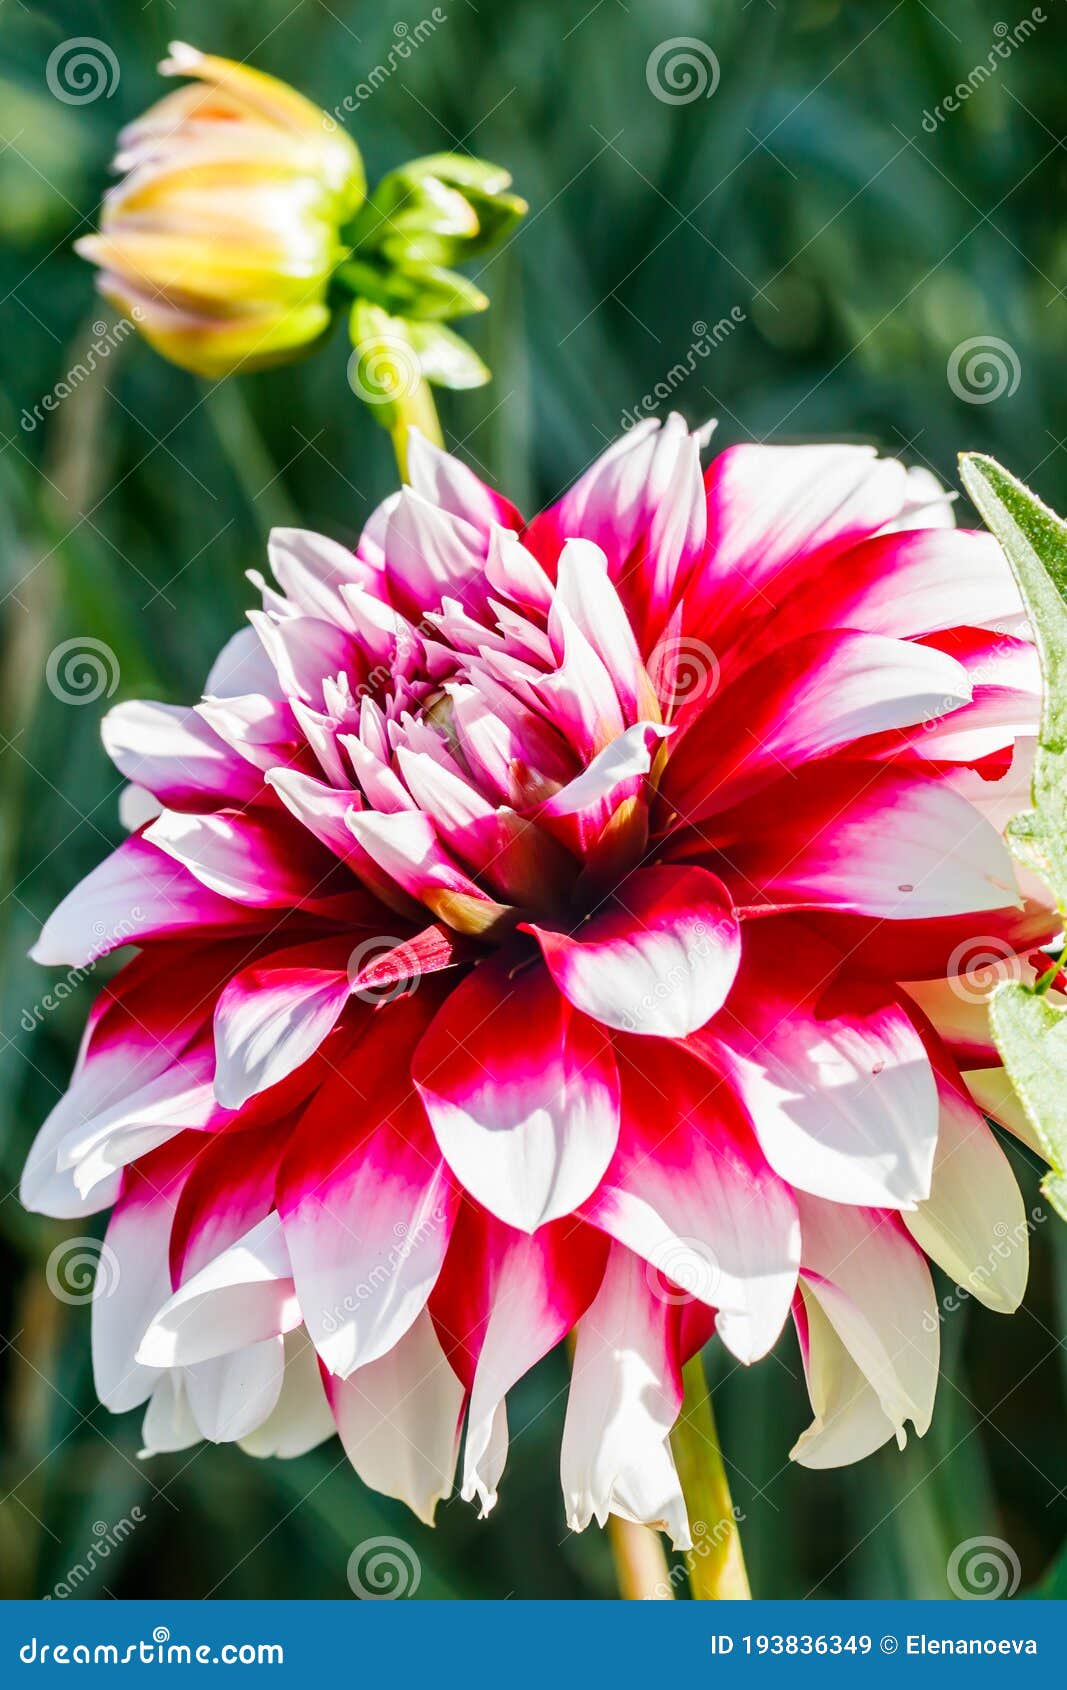 Bicolor Dahlia Flower Growing in the Garden Stock Image - Image of ...